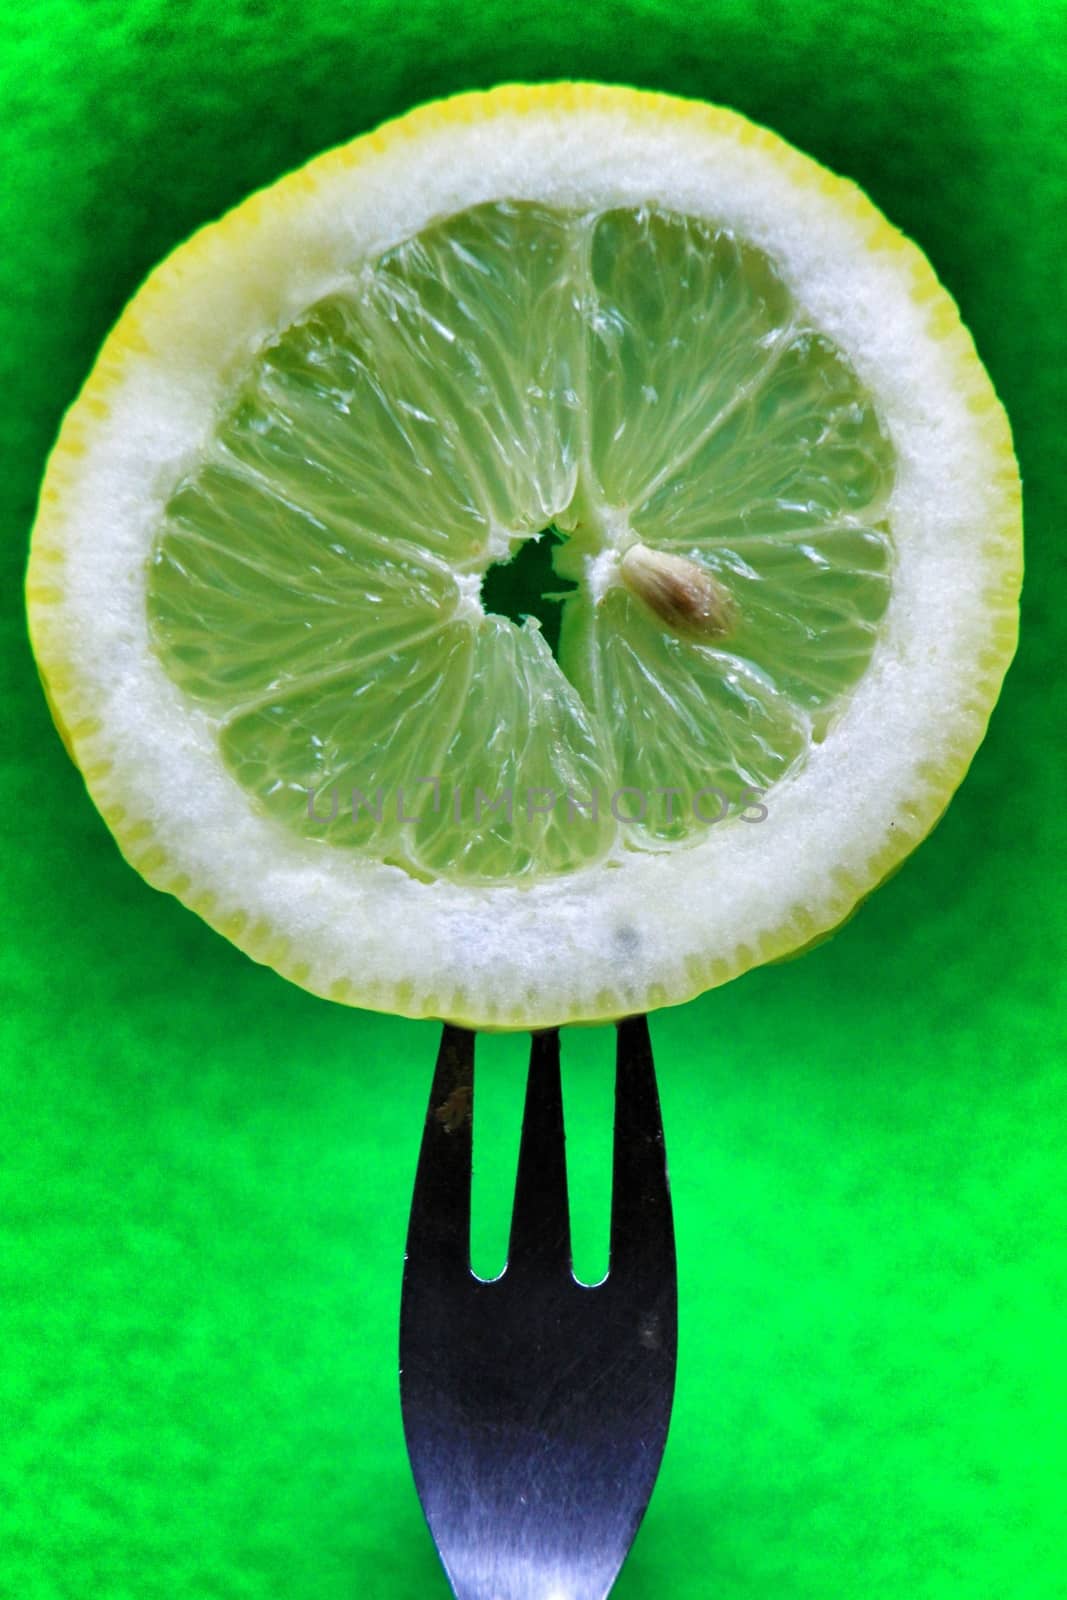 Slice of lemon pricked on fork on green background by soniabonet